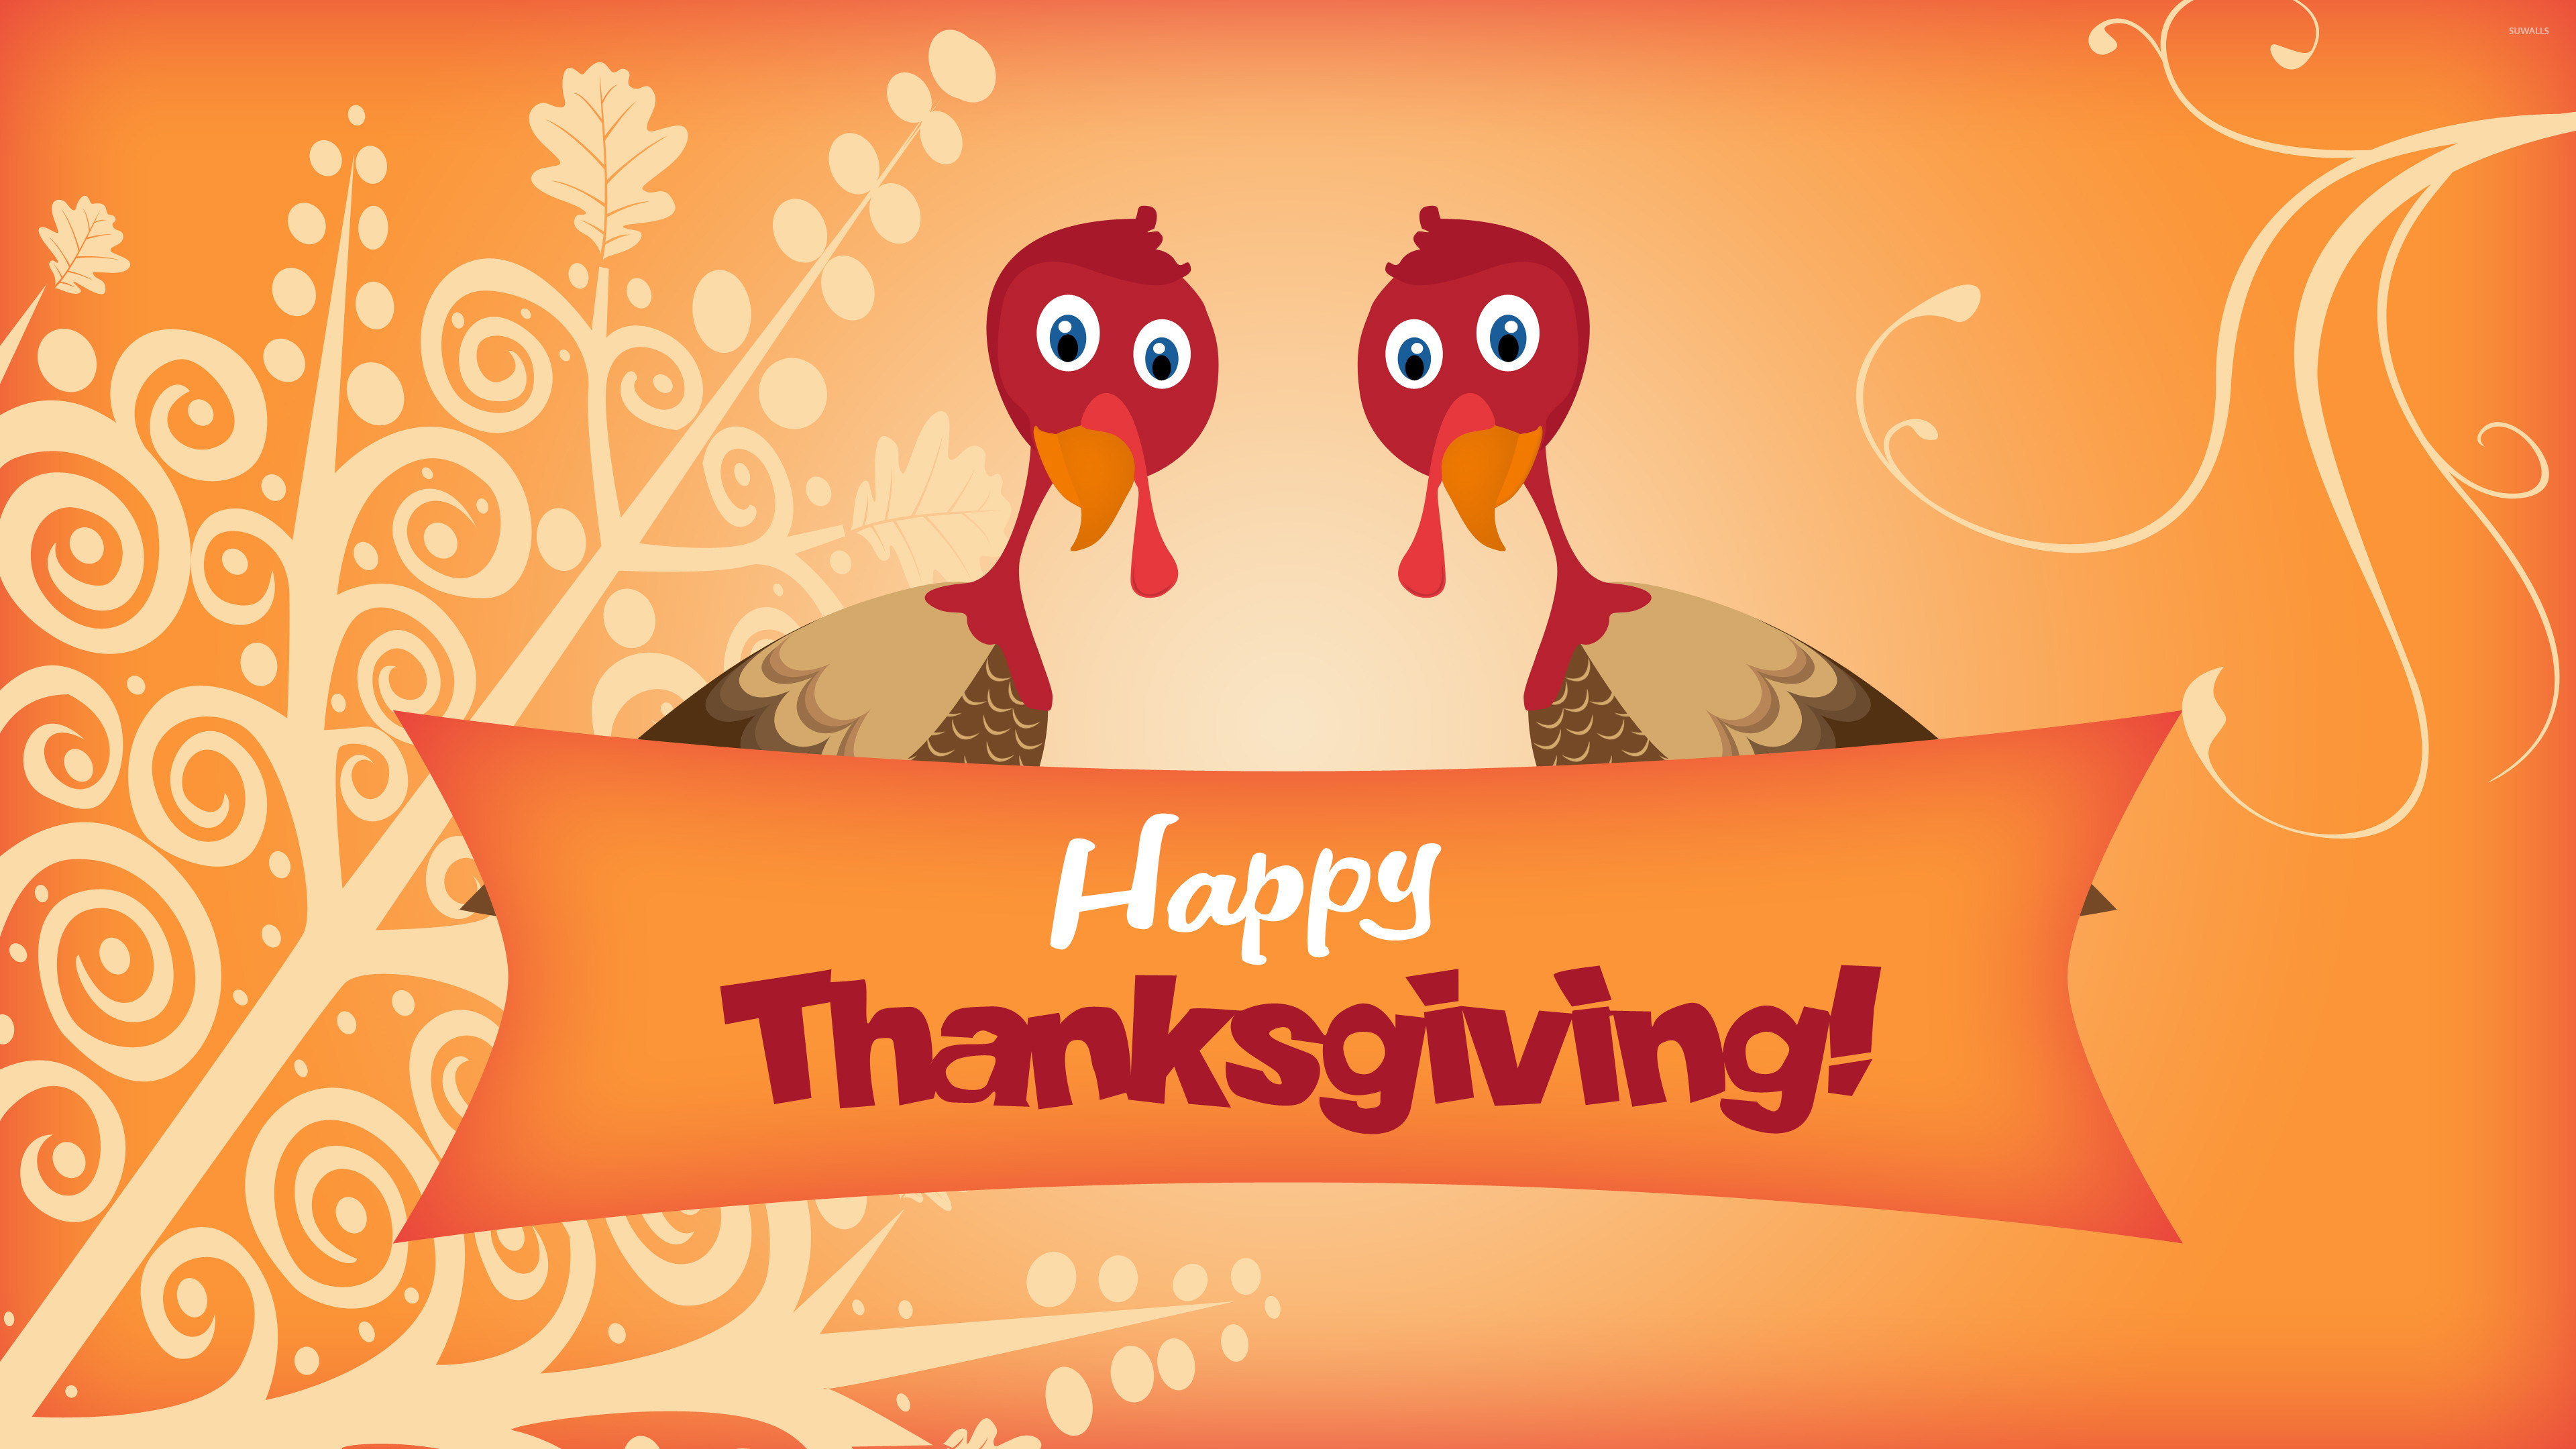 3840x2160 Two turkeys wishing you Happy Thanksgiving wallpaper  jpg